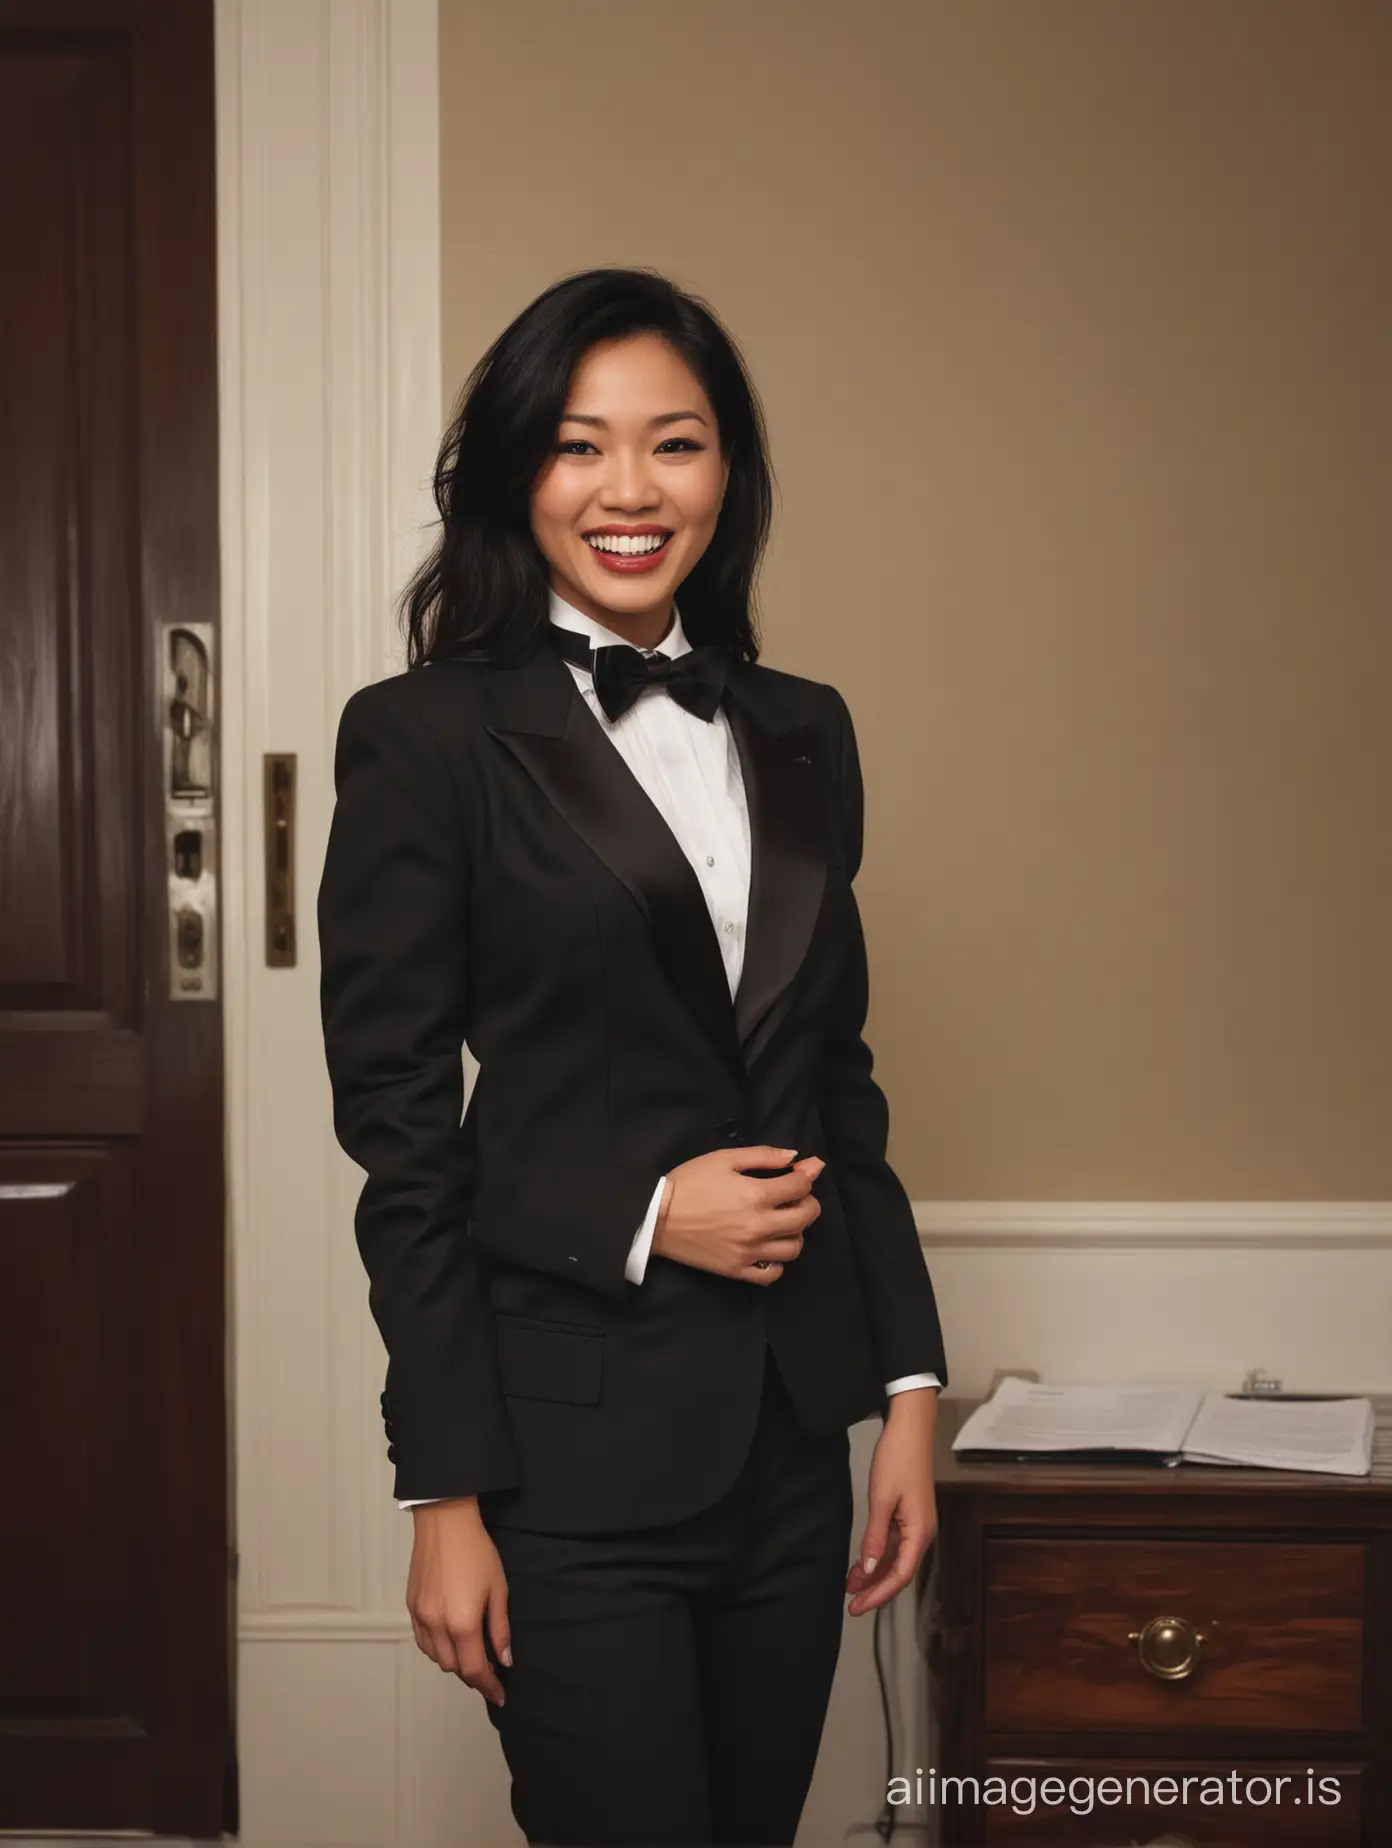 Elegant-Vietnamese-Woman-in-Tuxedo-in-a-Luxurious-Mansion